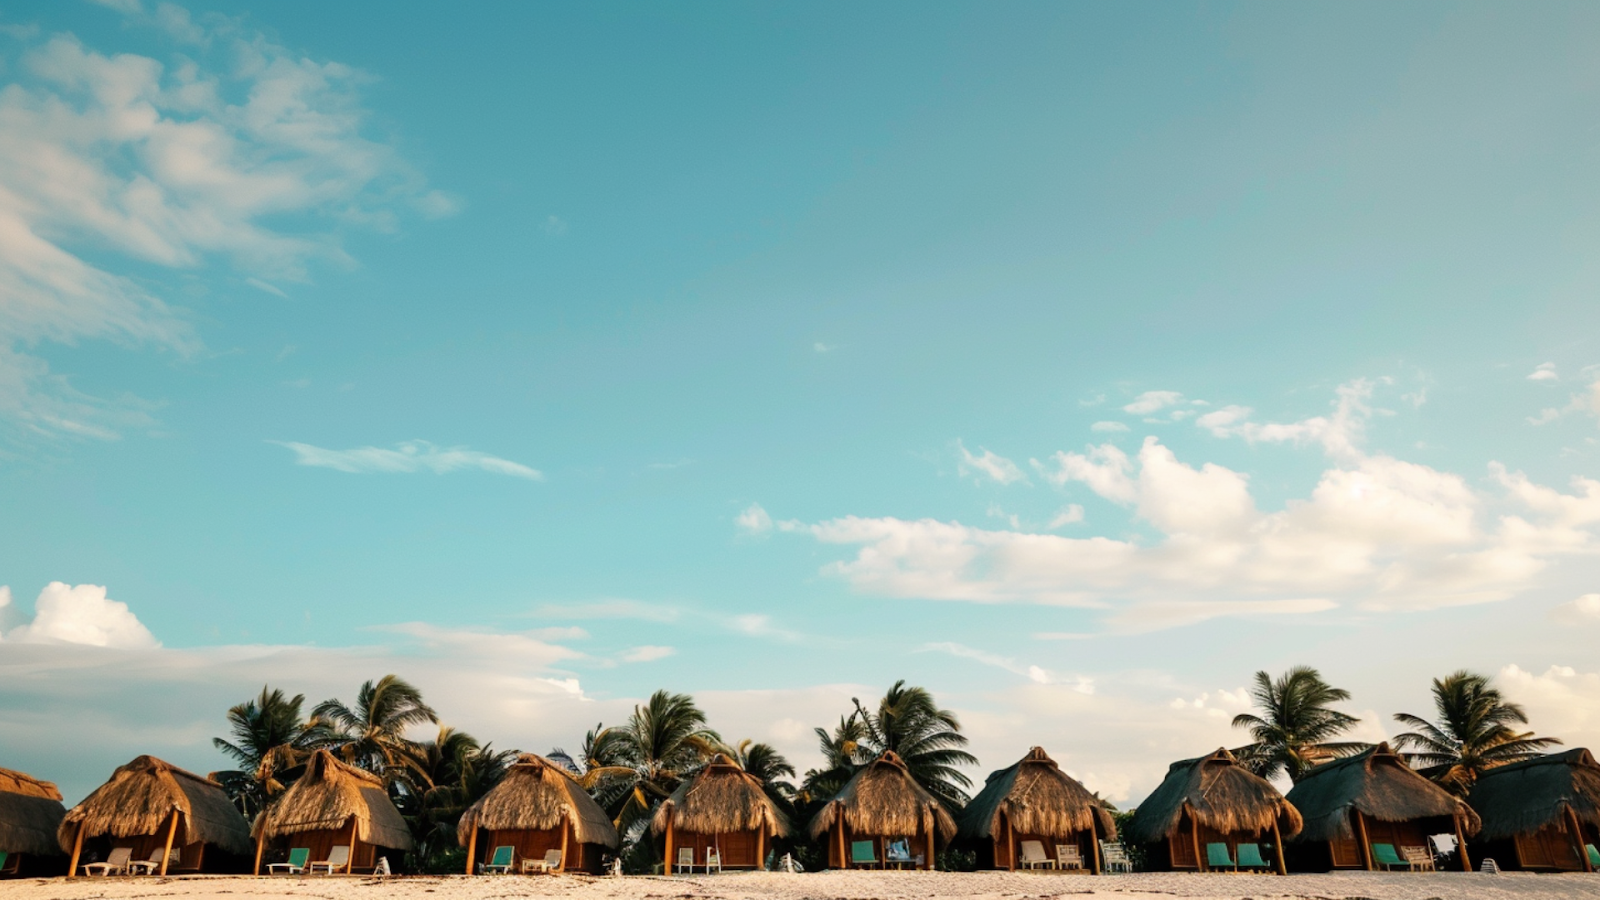 Nipa huts lined along the shore of a beach in Cancun